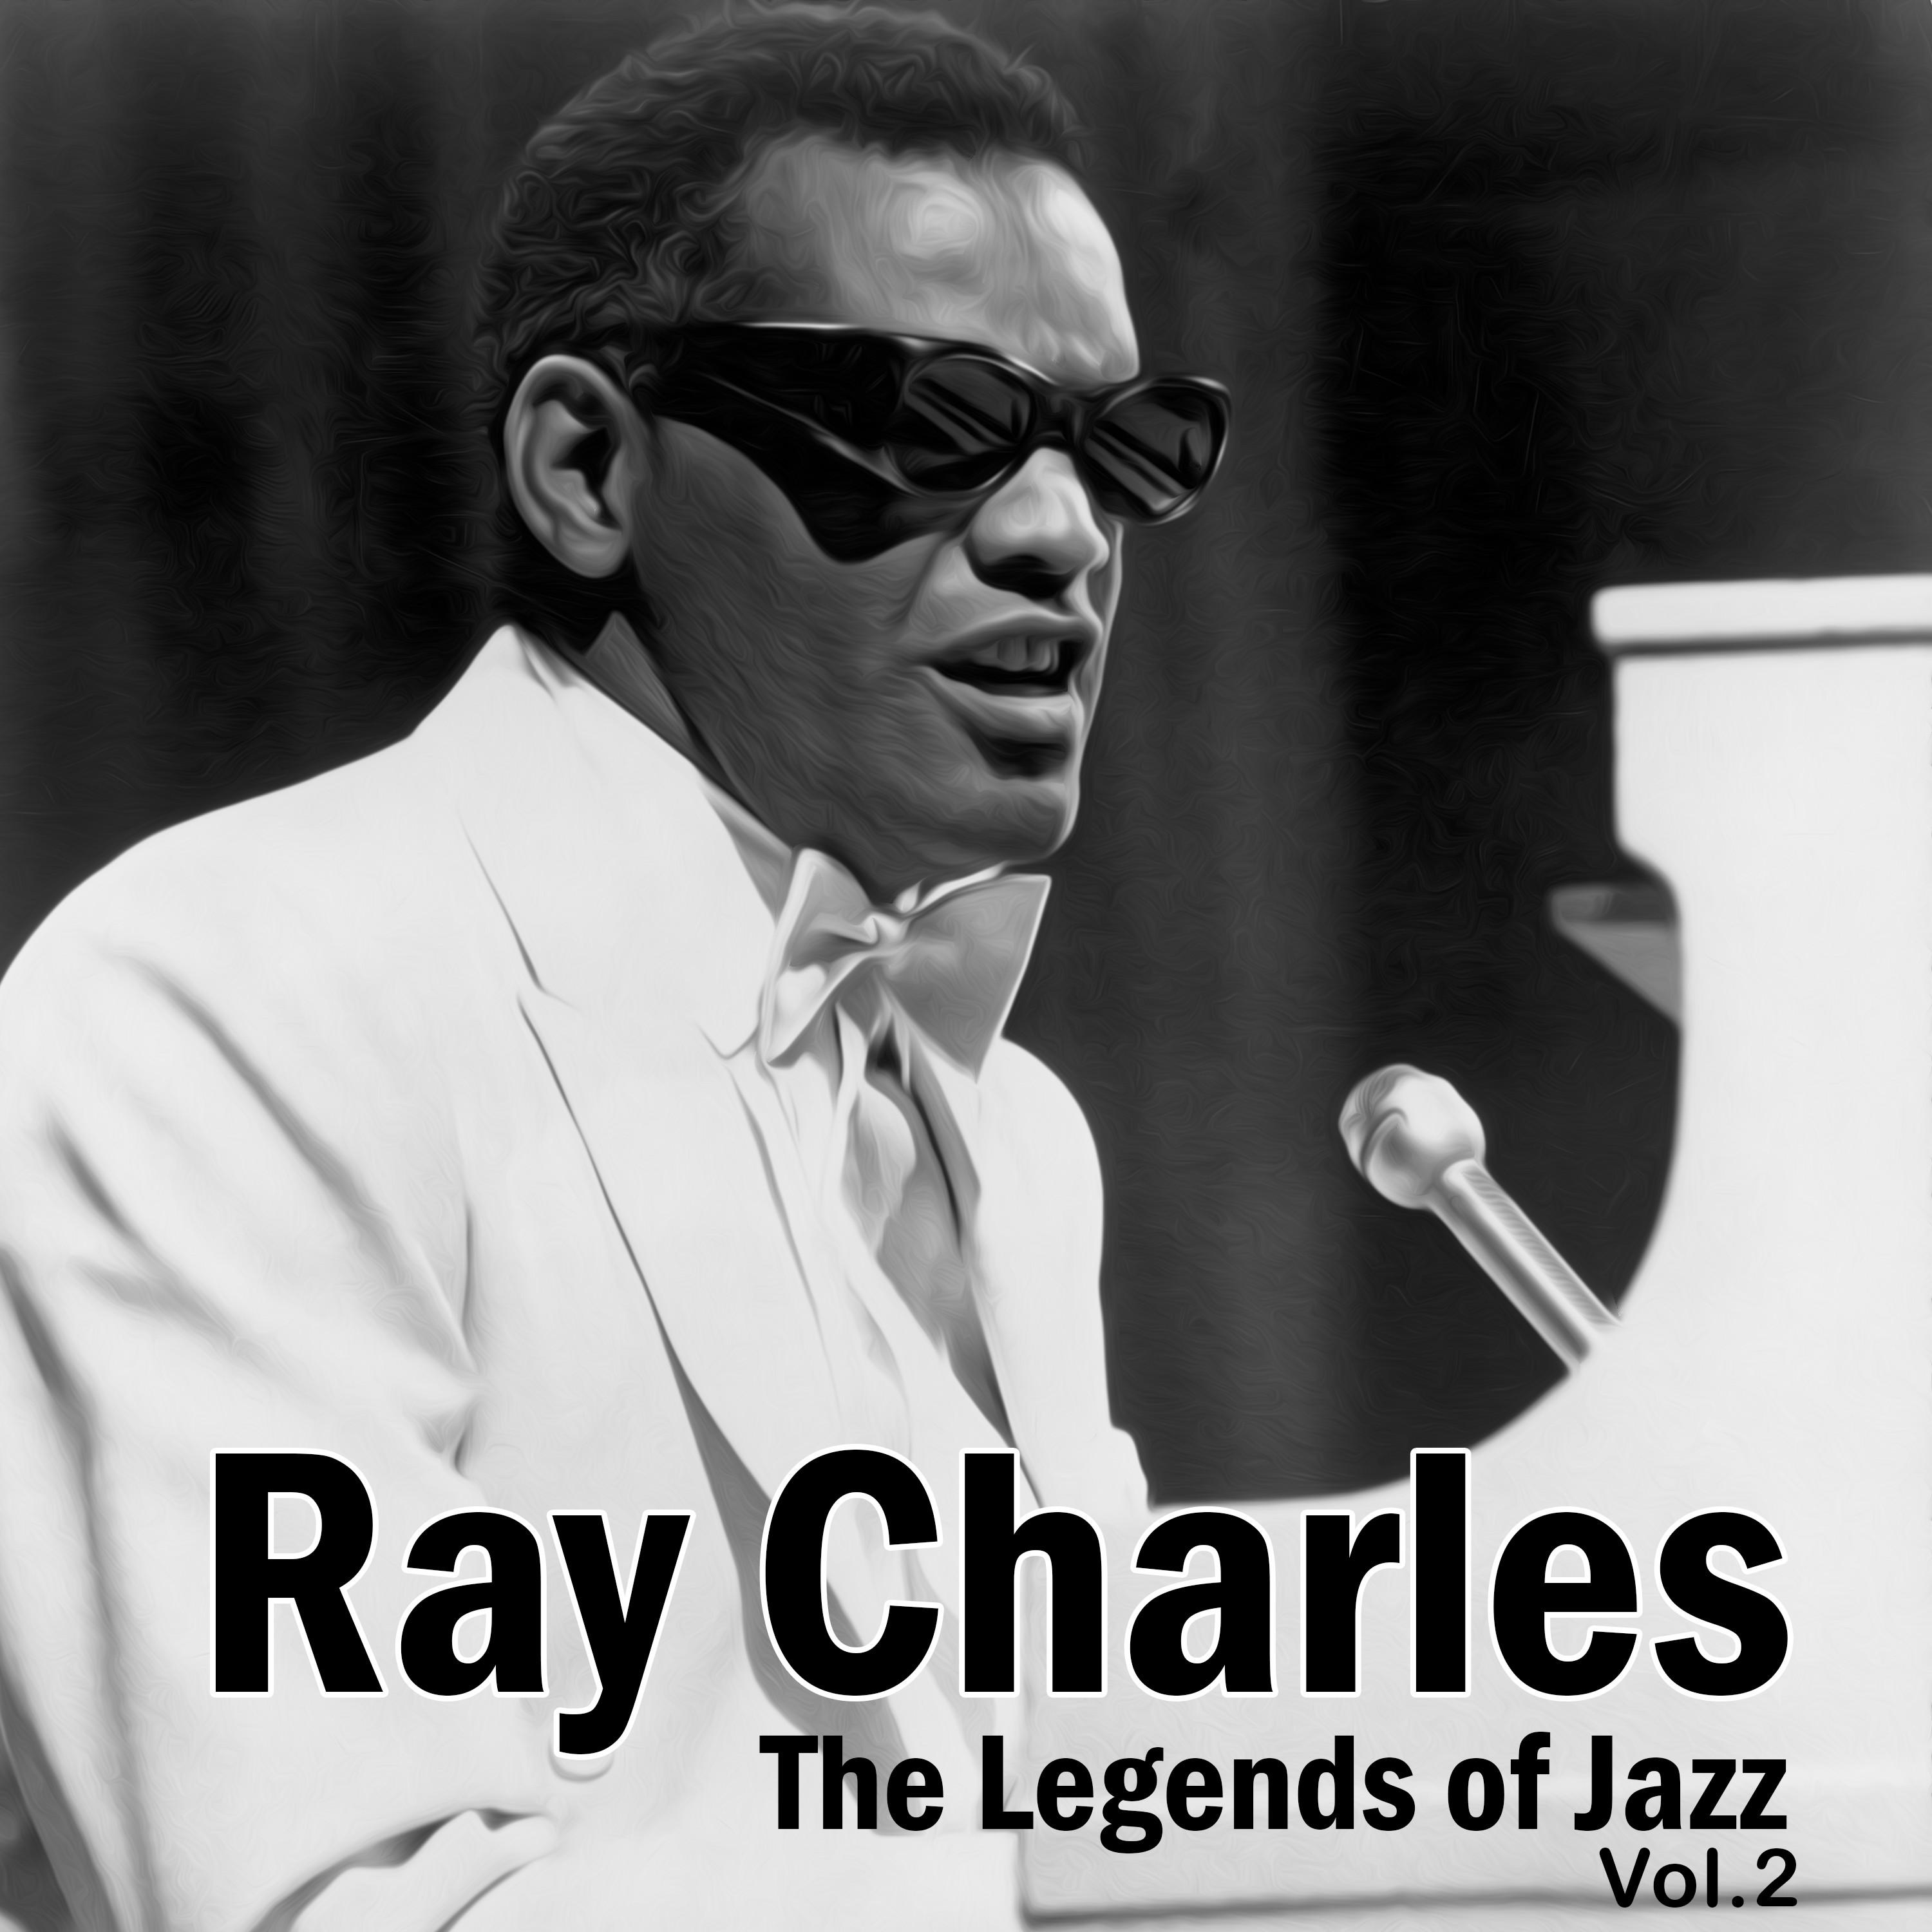 The Legend of Jazz (Vol. 2)